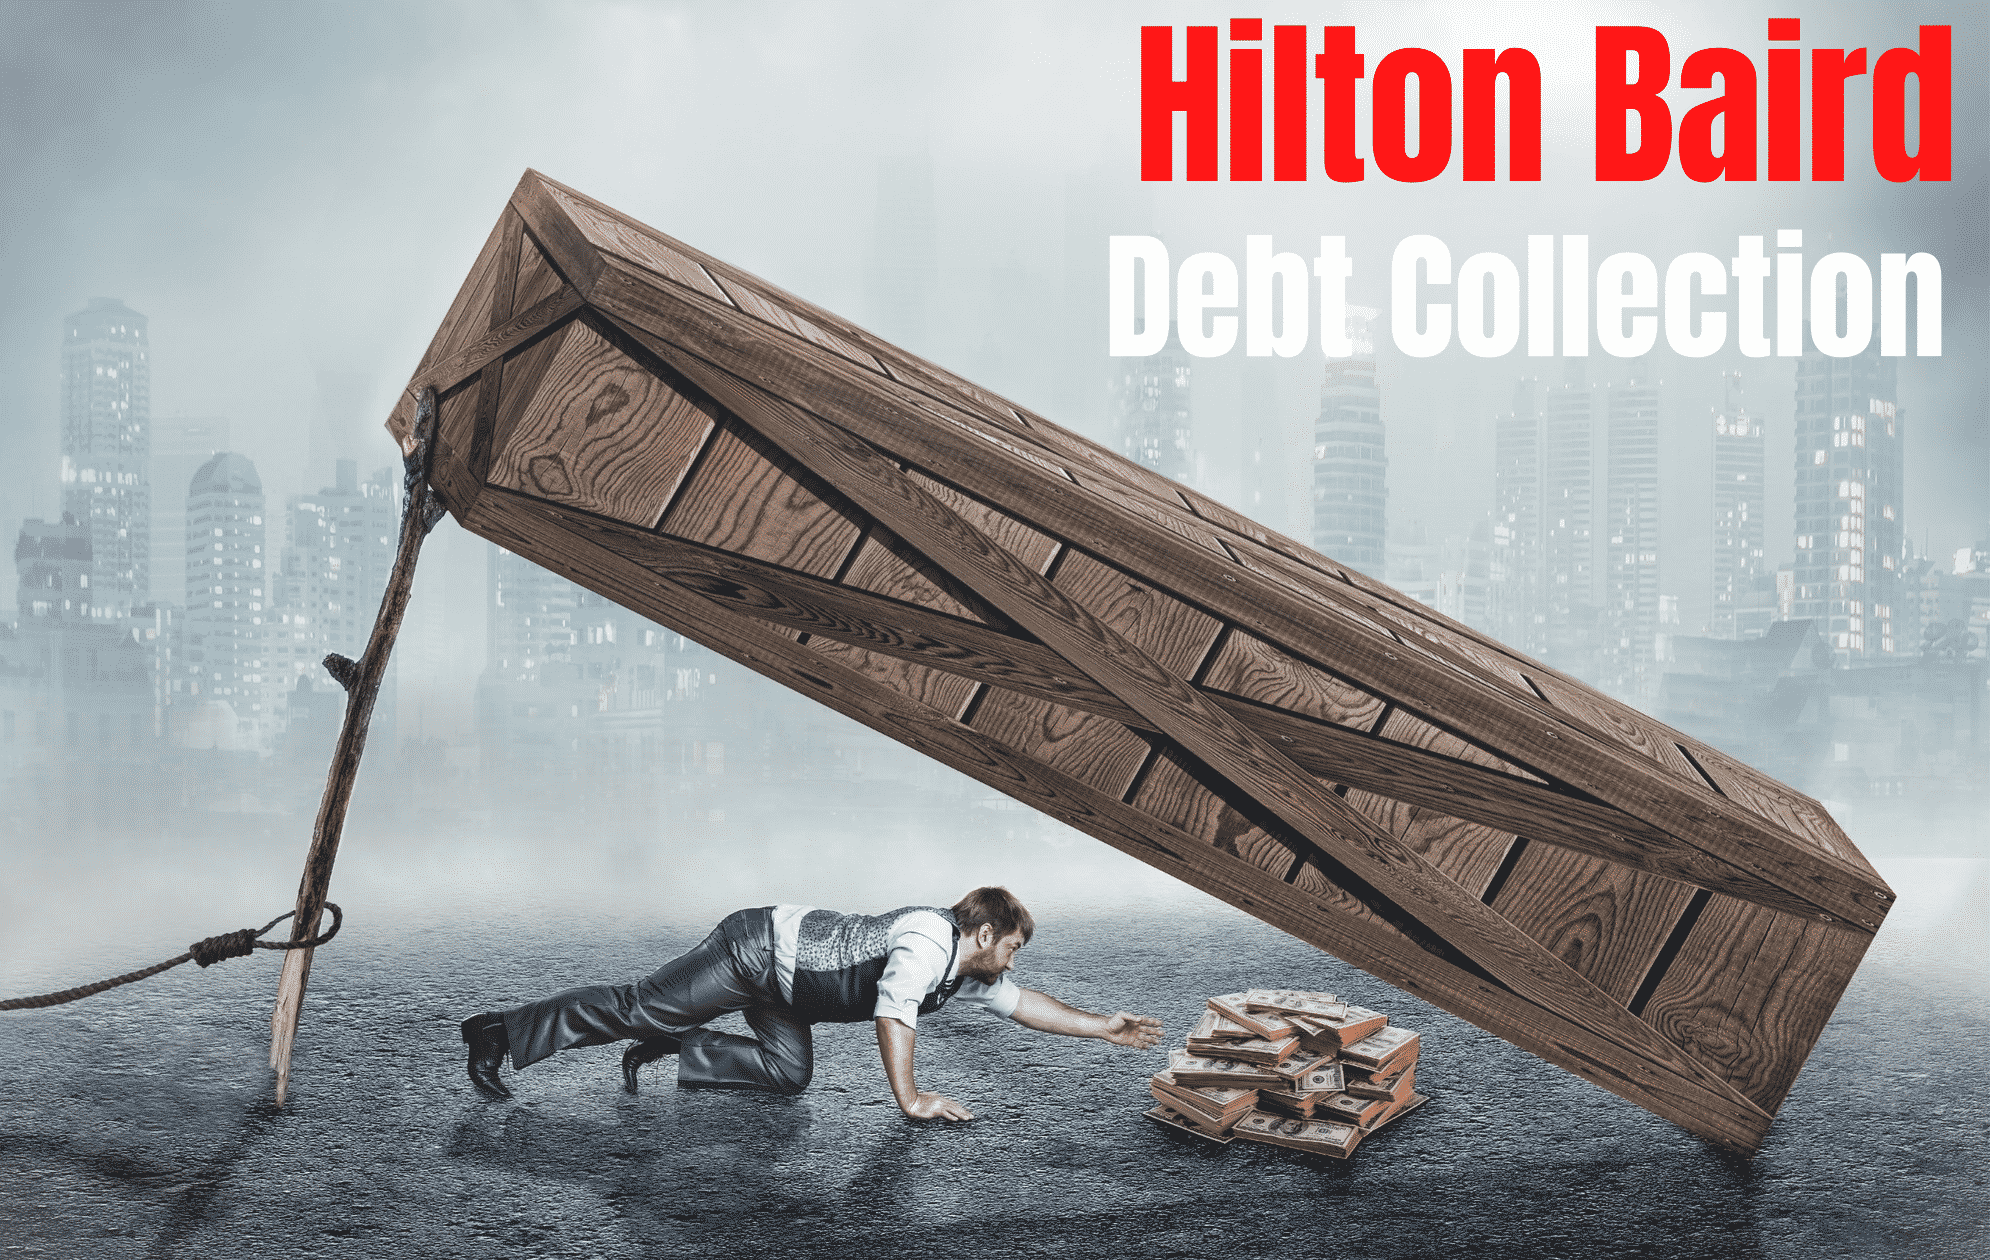 hilton-baird-debt-collectors